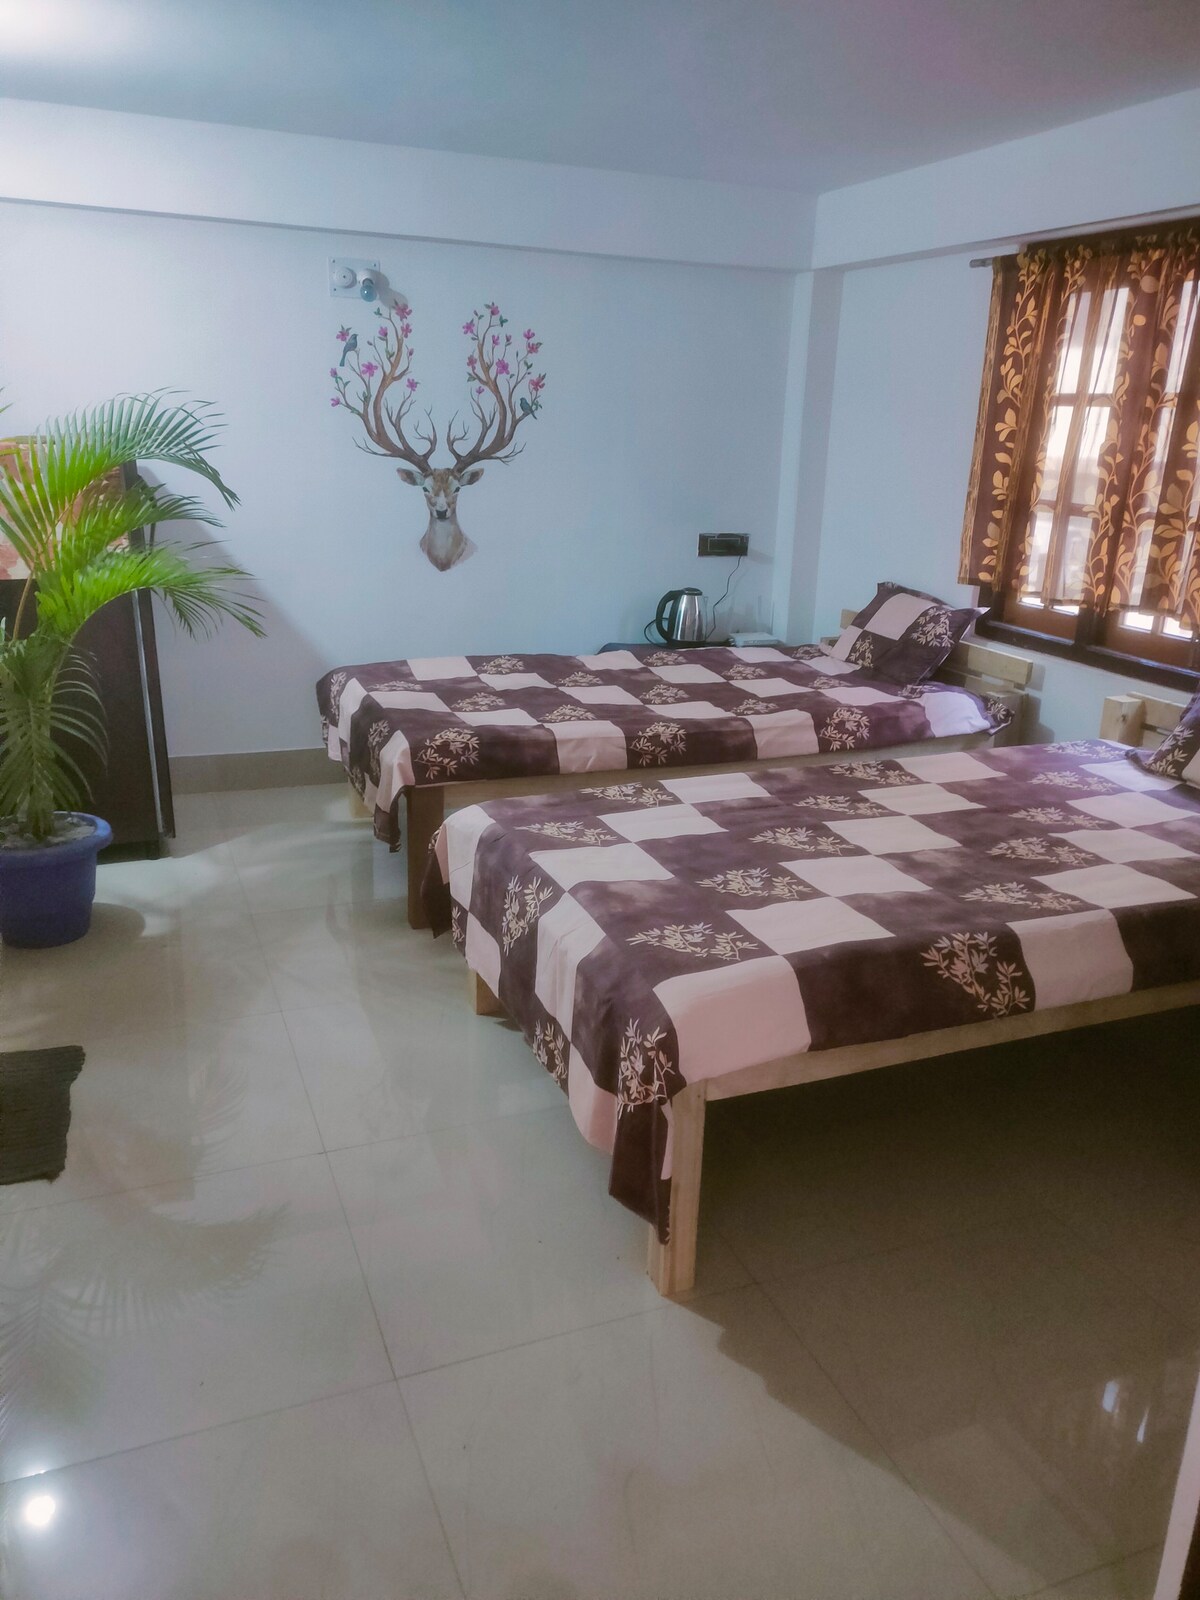 SARAI~ Cozy 1 Room 2 beds. 3km to Bagdogra Airport